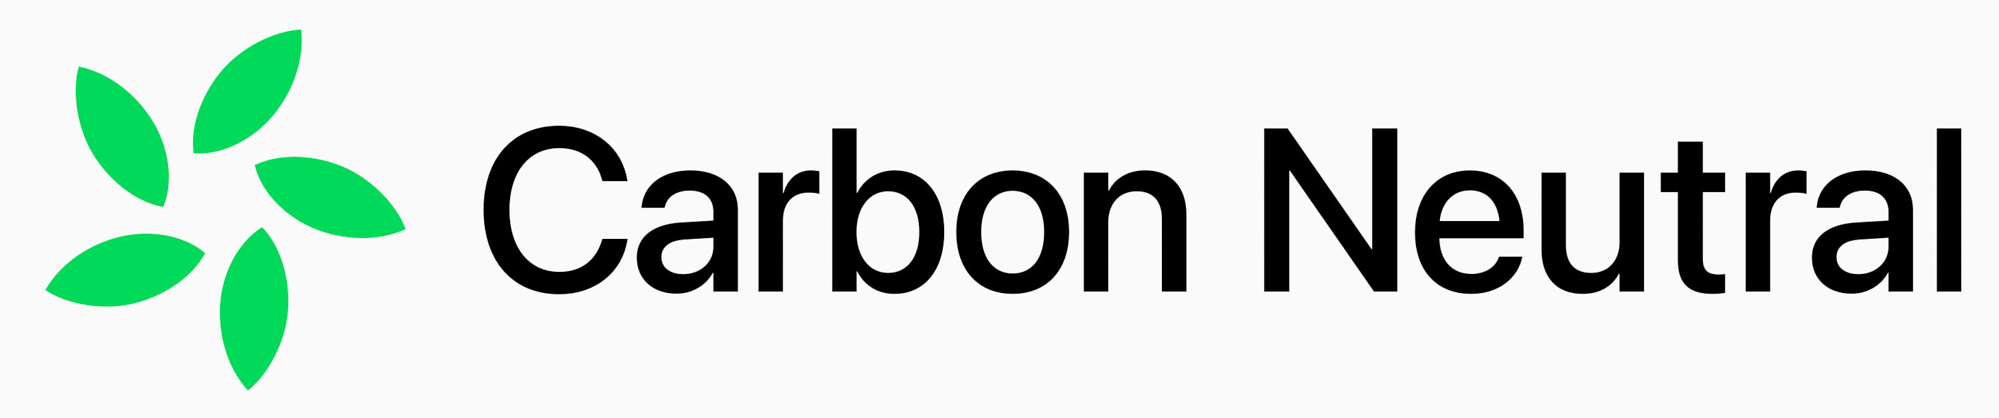 Новый логотип Apple Carbon Neutral.